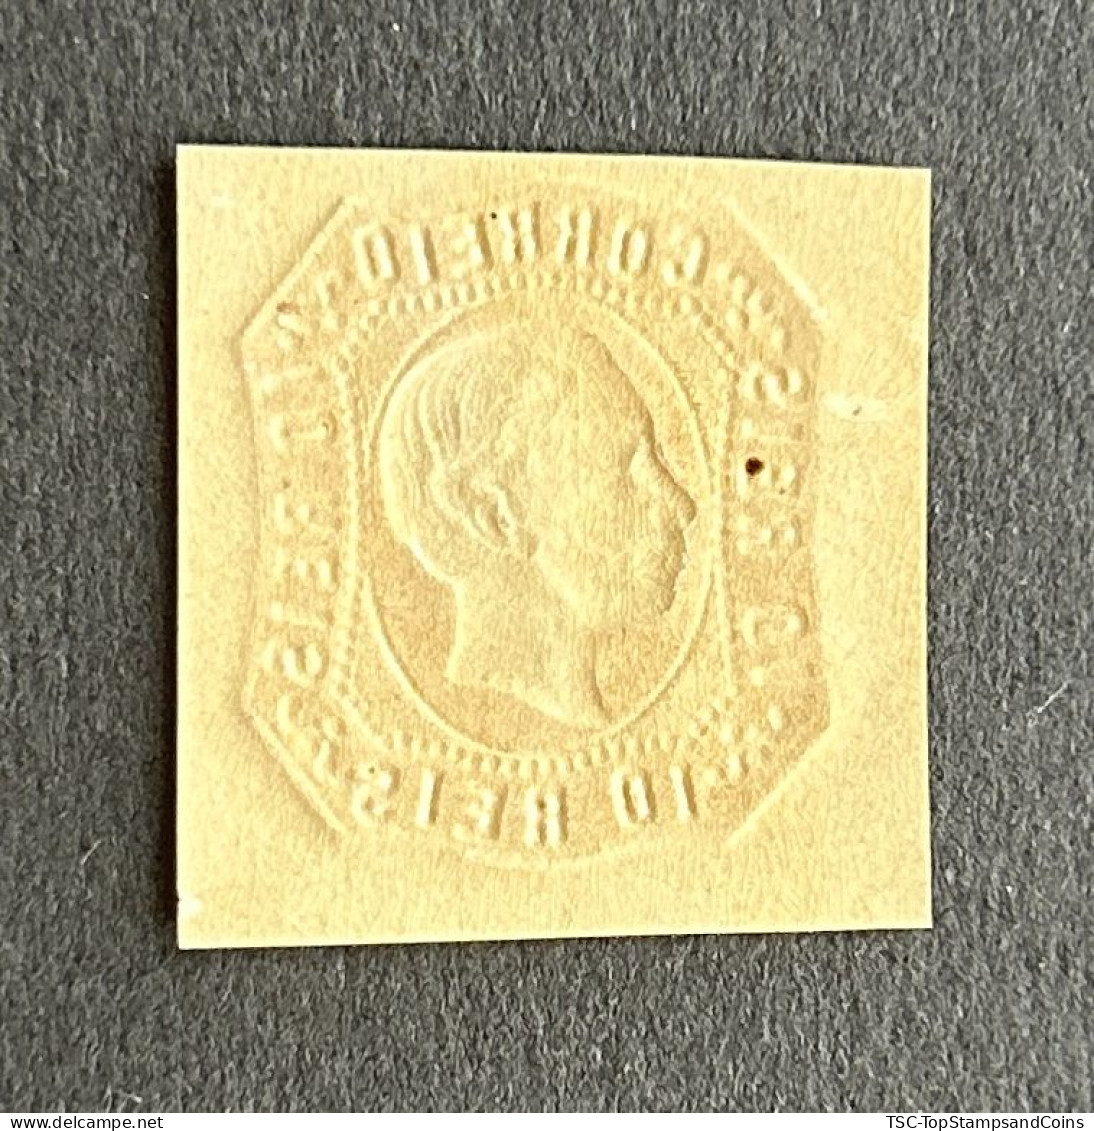 POR0015MNH - King D. Luís I - 10 Reis MNH Non Perforated Stamp - Portugal - 1863 - Ongebruikt